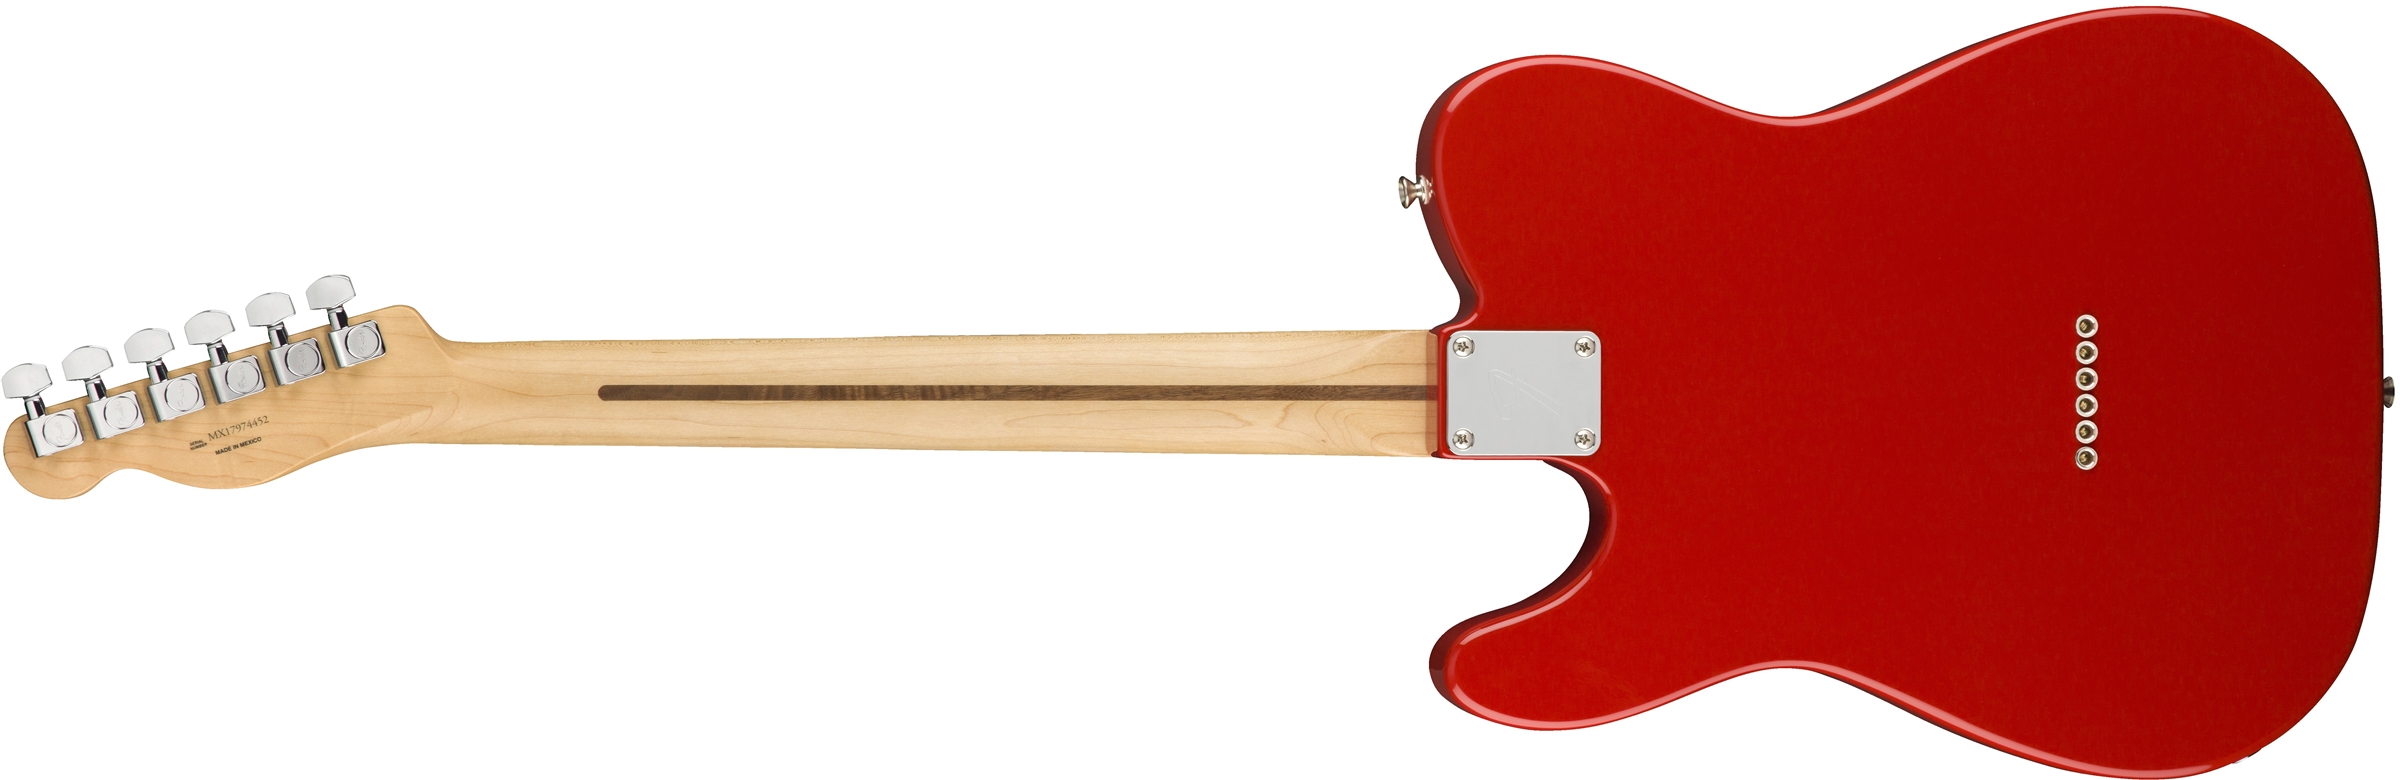 Fender Tele Player Mex Ss Pf - Sonic Red - E-Gitarre in Teleform - Variation 1